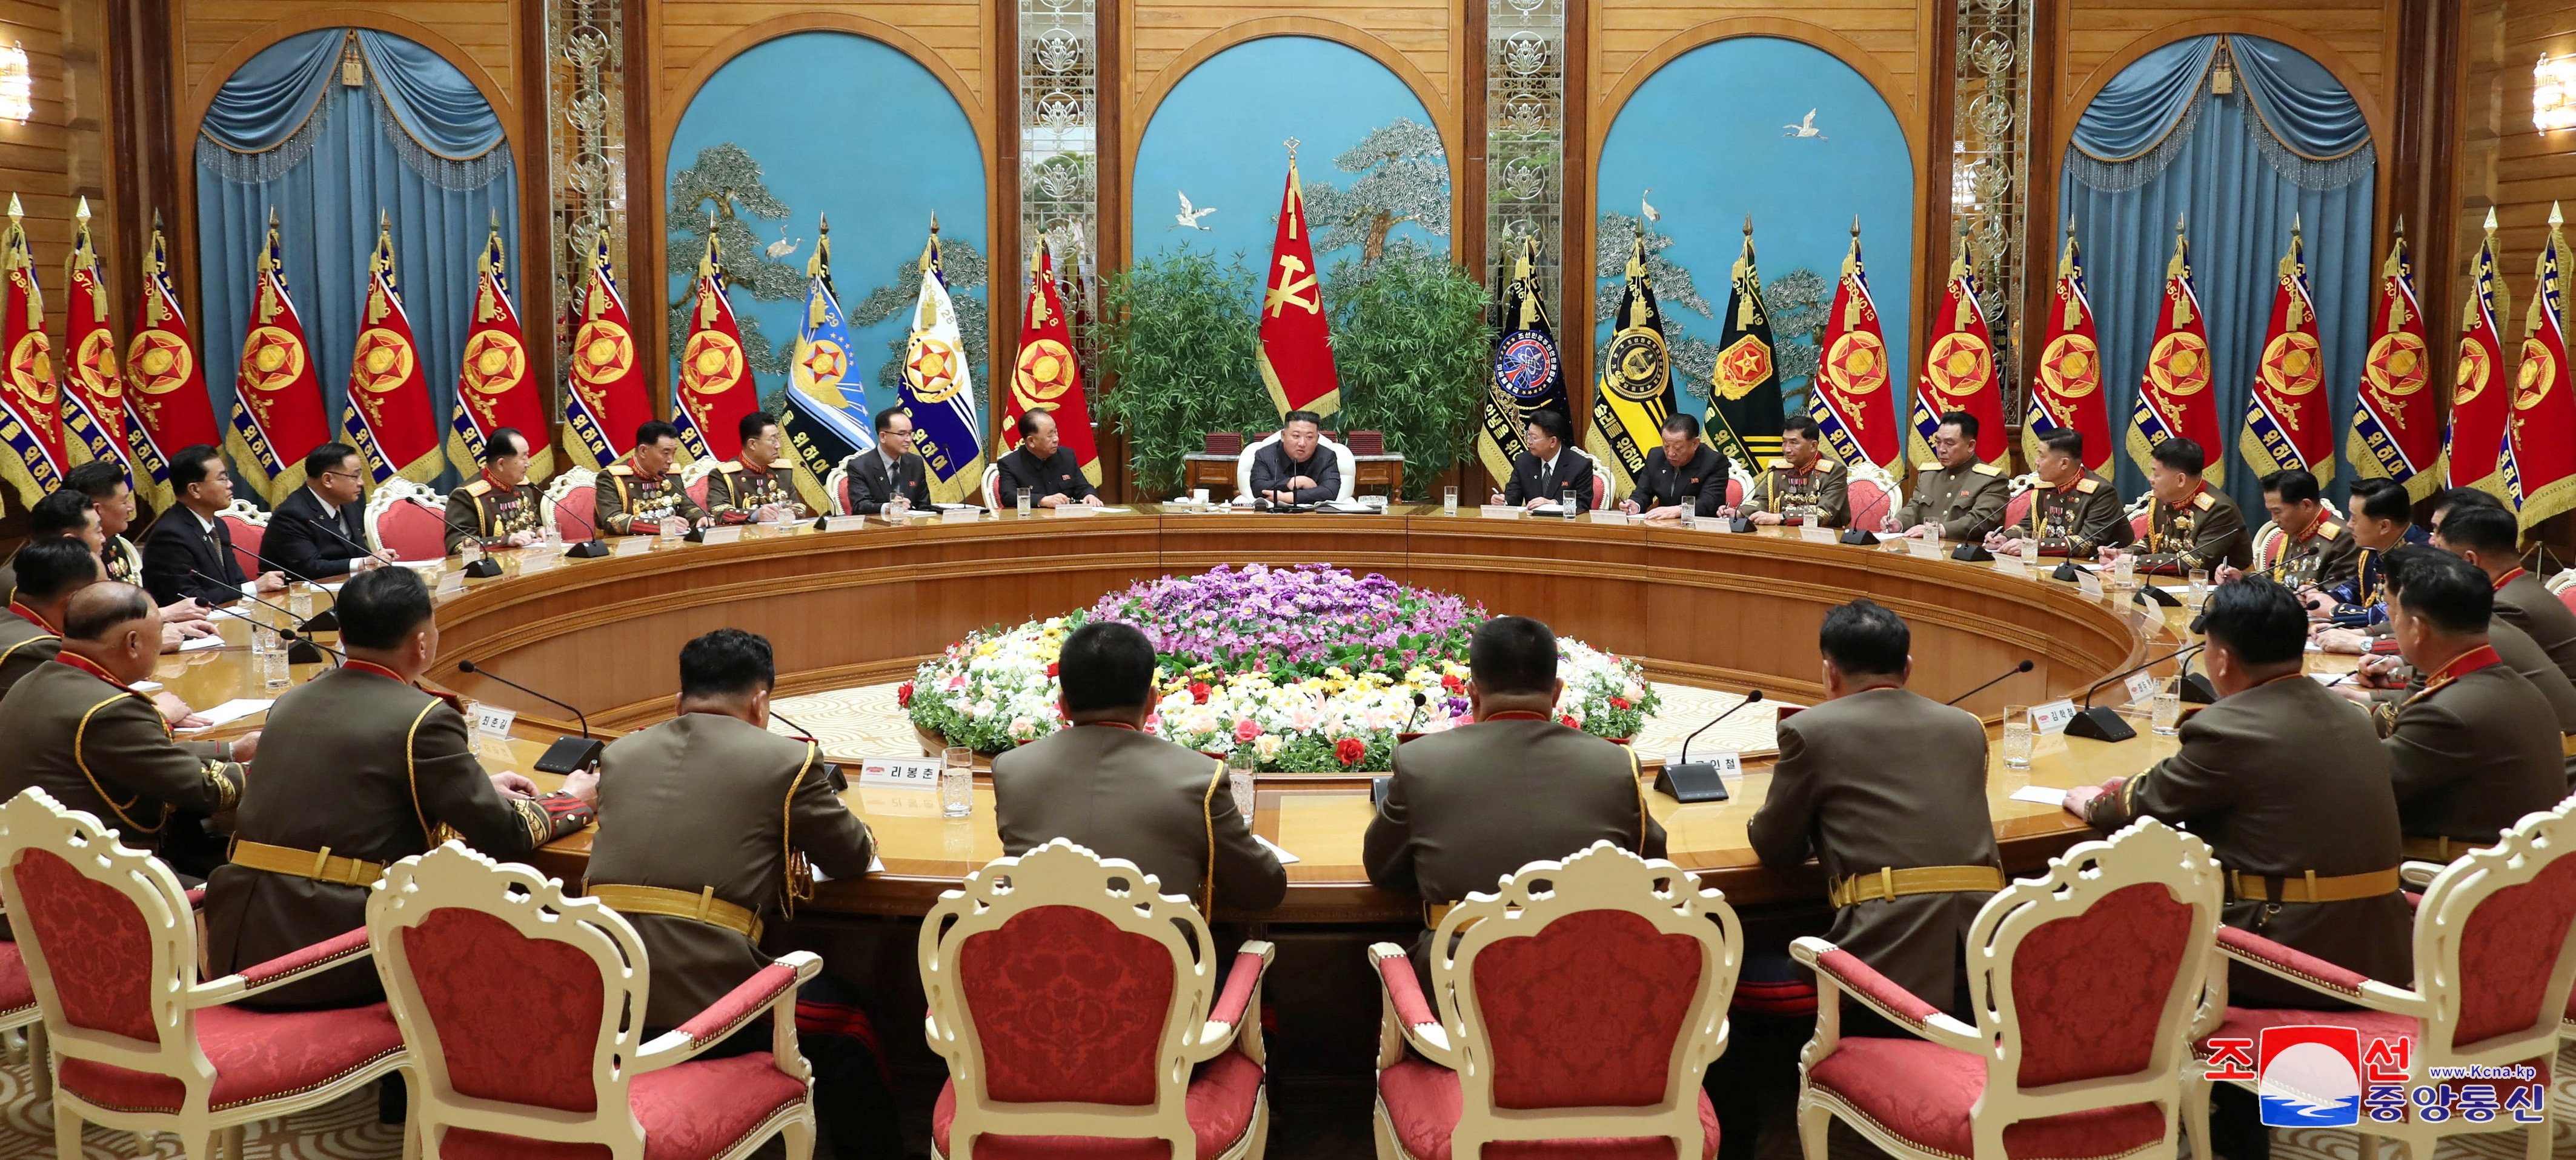 North Korean leader Kim Jong Un presides over a military meeting